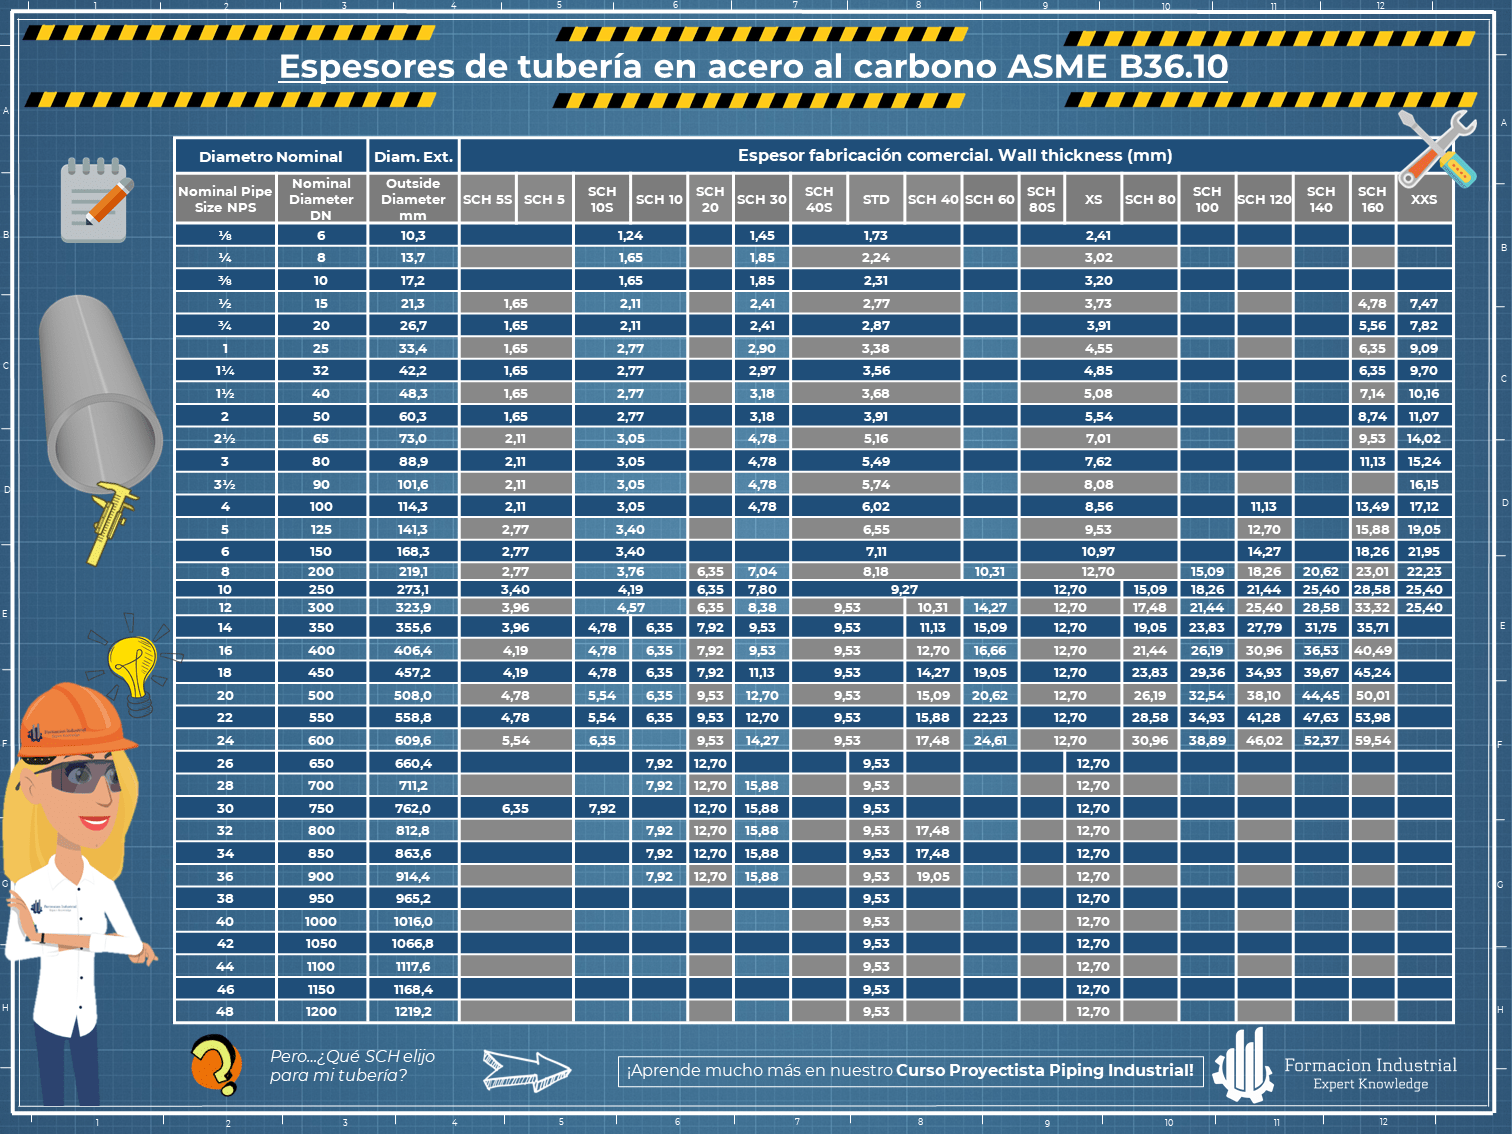 Infografía detallada de los espesores de tubería según ASME B36.10